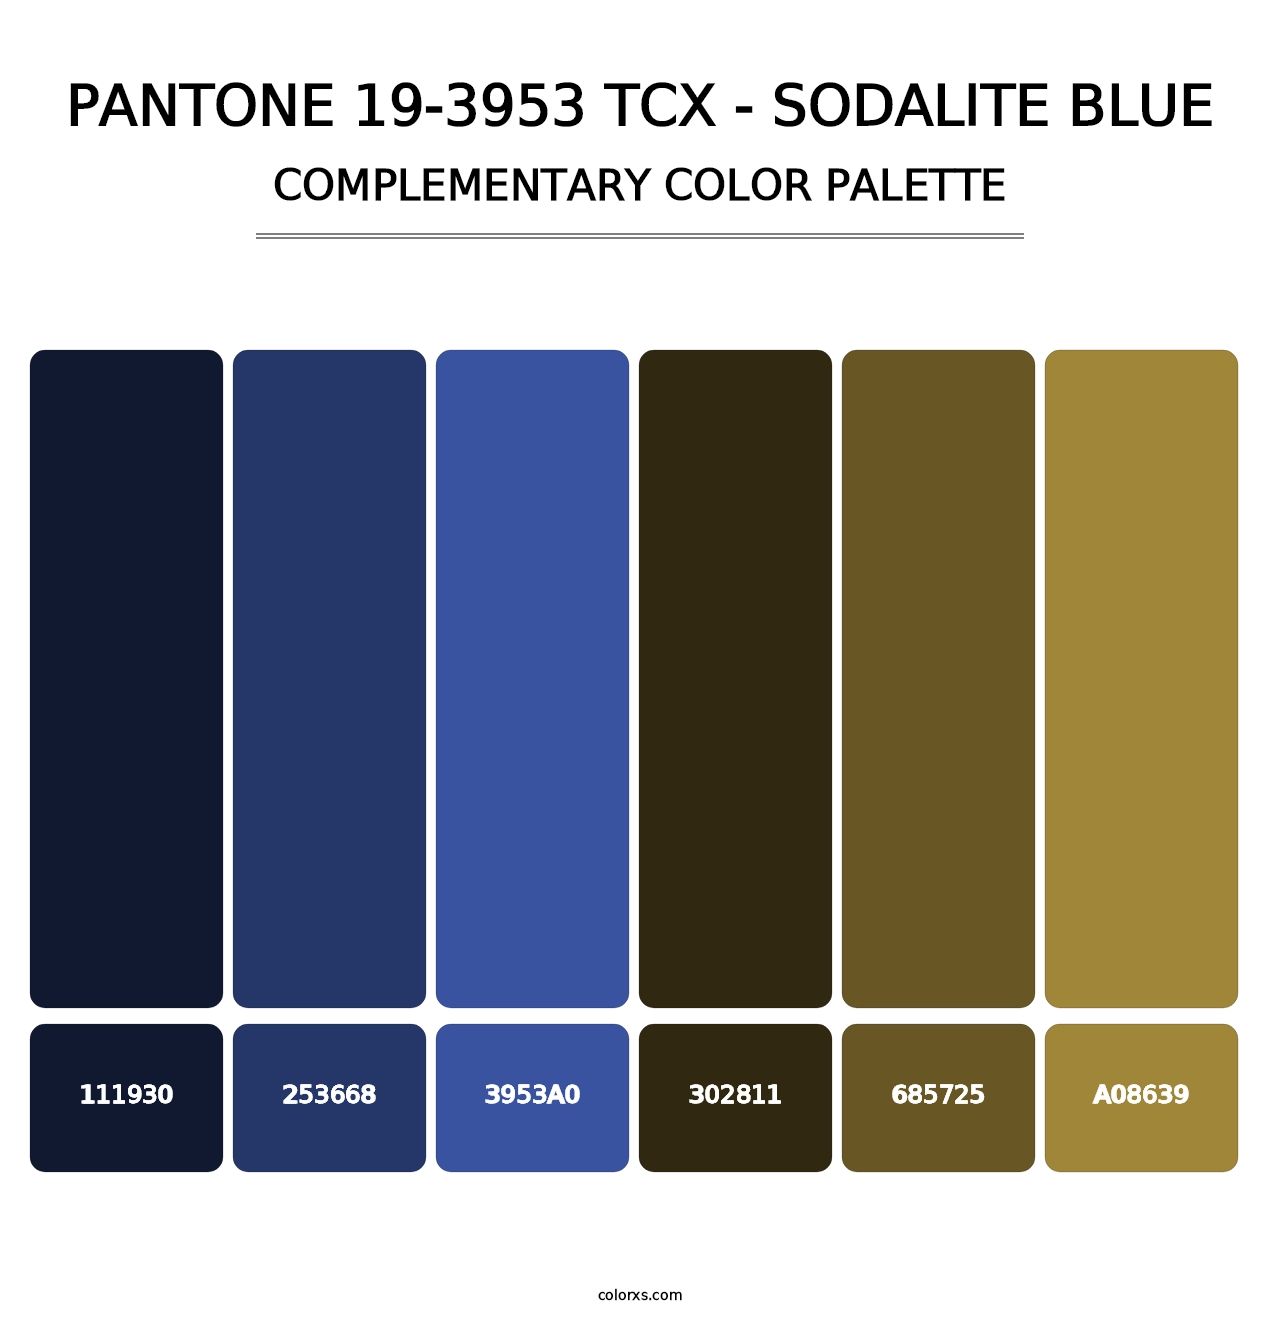 PANTONE 19-3953 TCX - Sodalite Blue - Complementary Color Palette